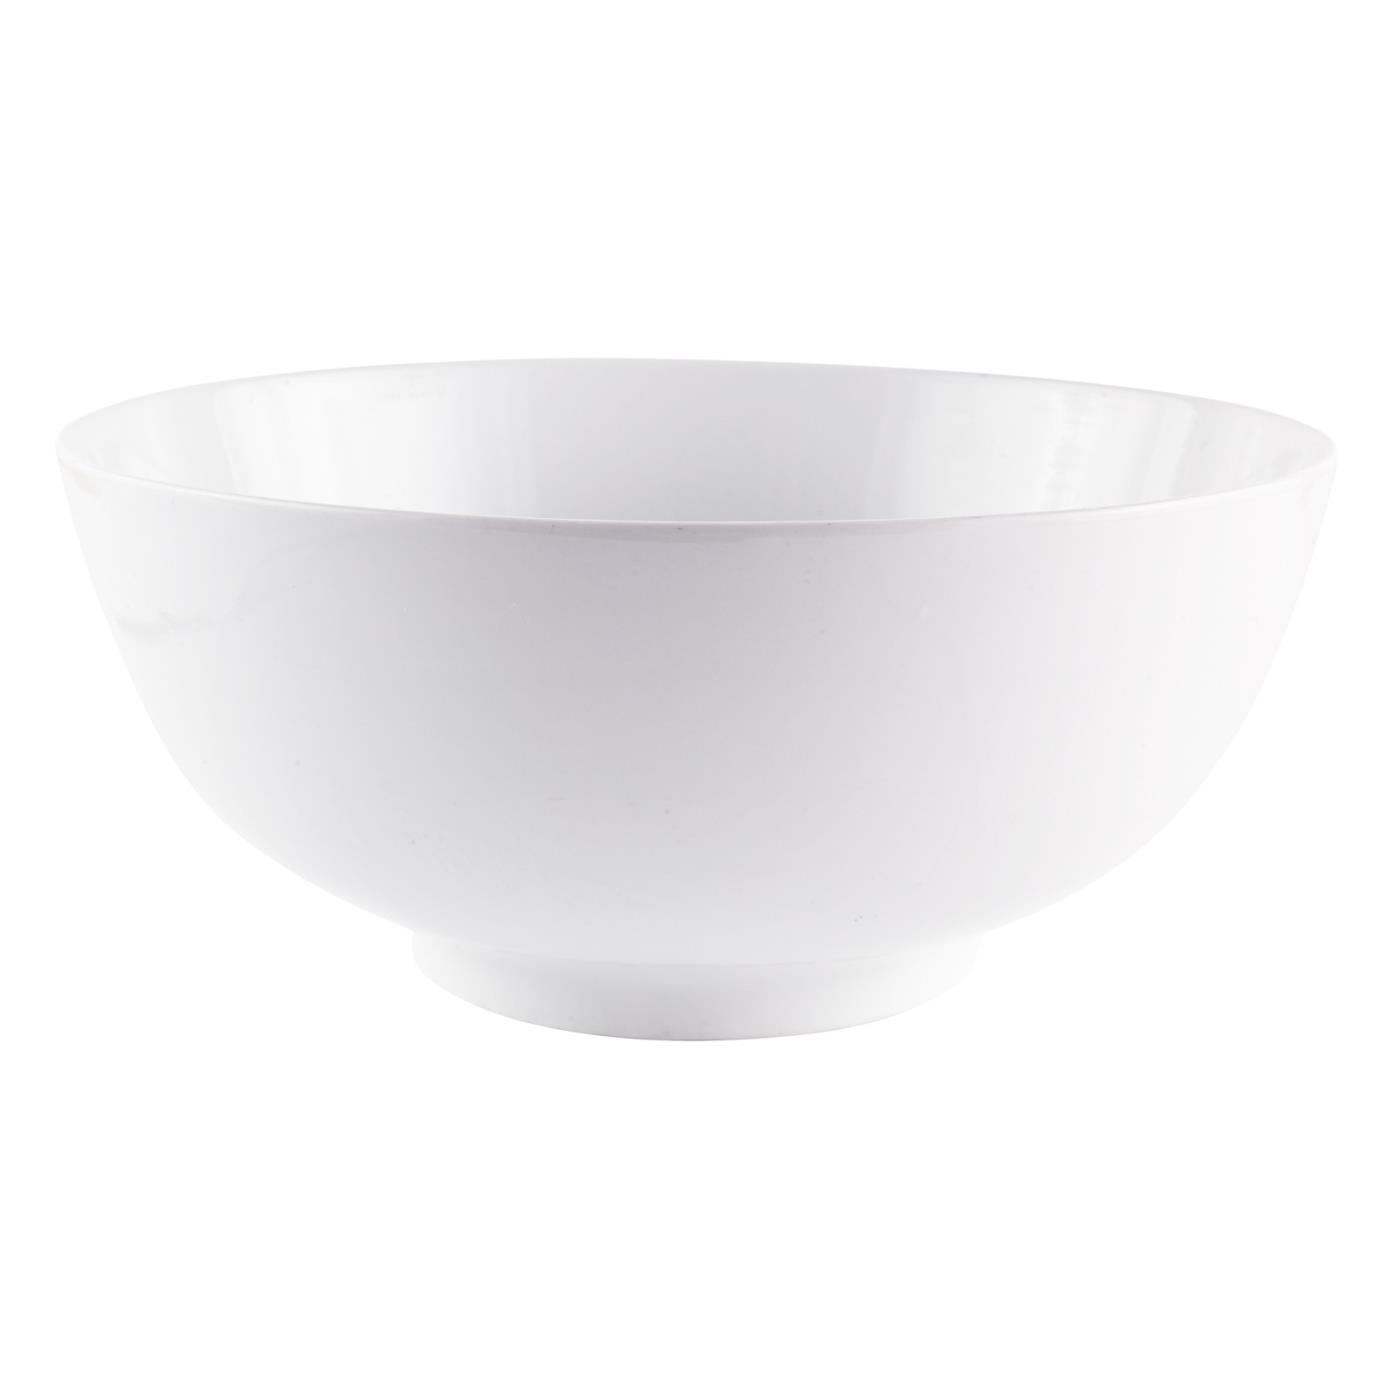 White Ceramic Round Bowl - 16"